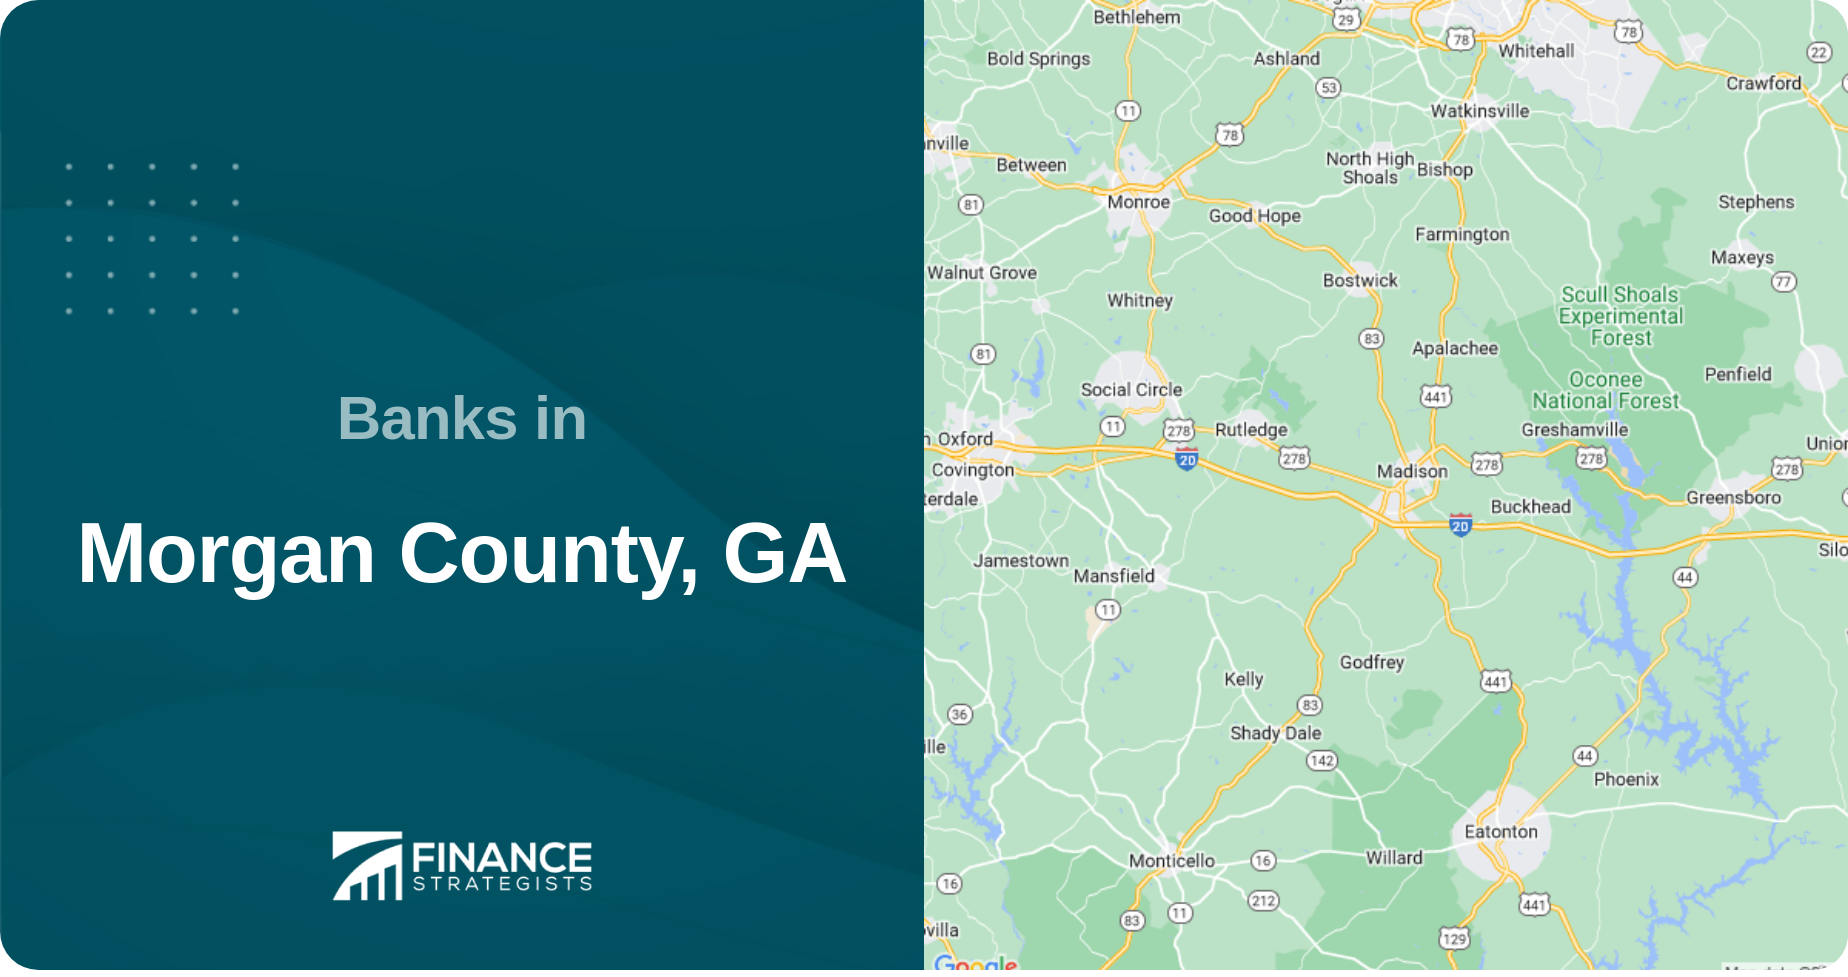 Banks in Morgan County, GA